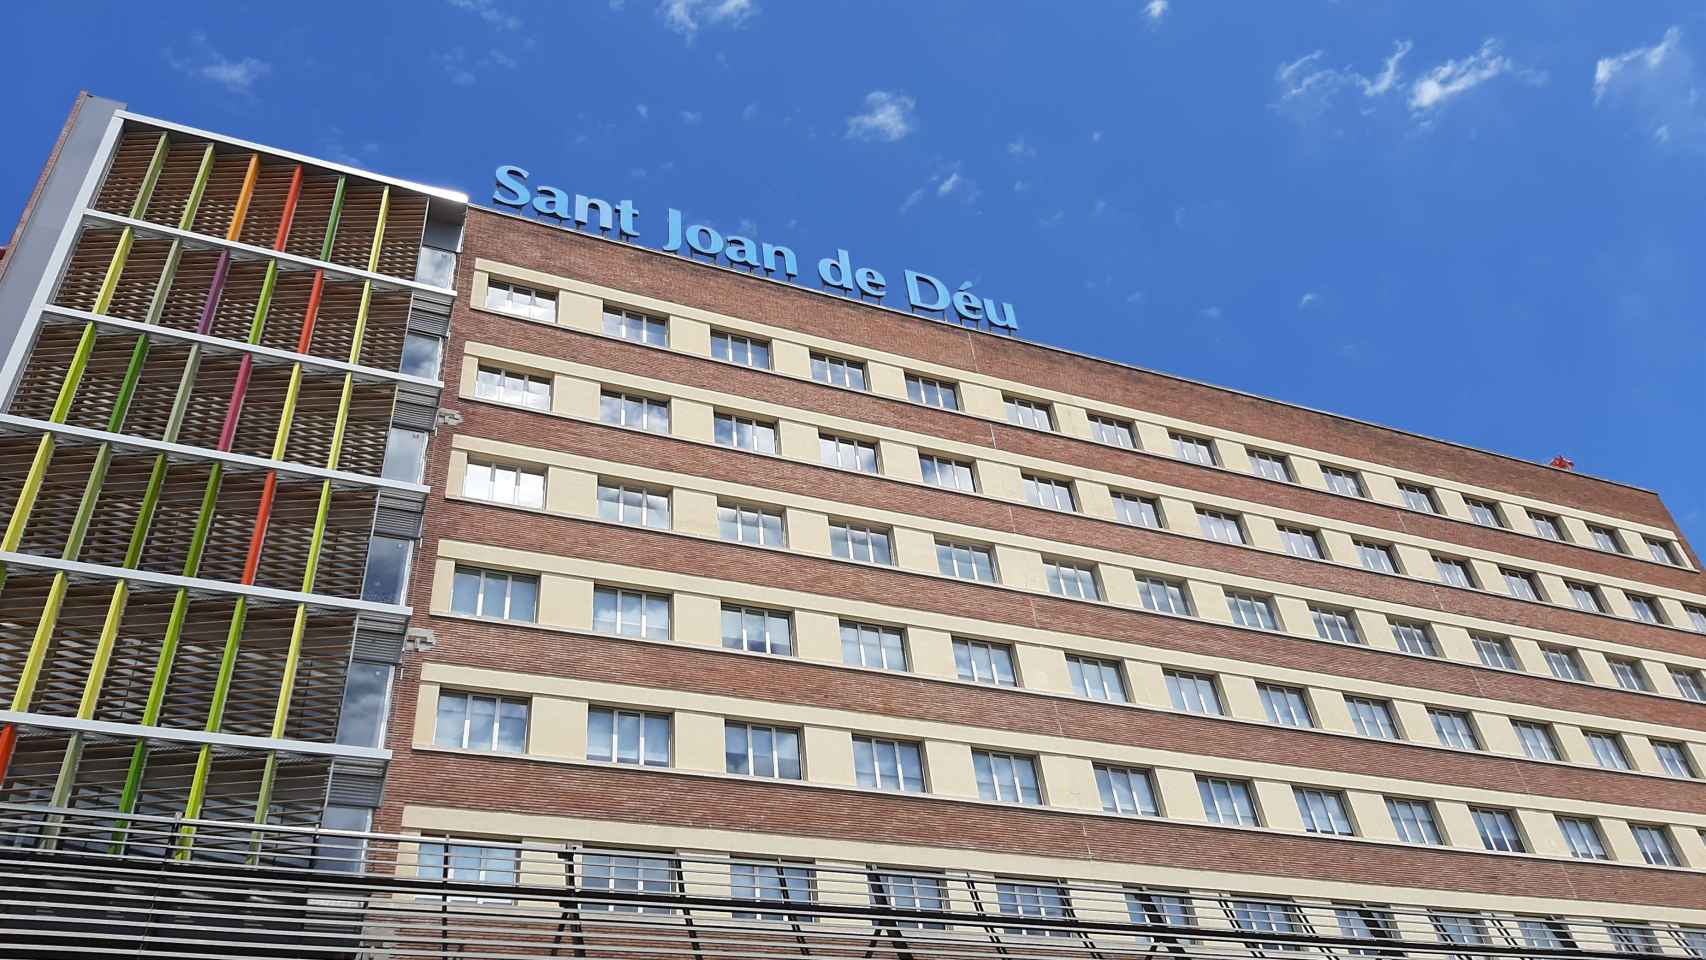 Fachada del Hospital Sant Joan de Déu, en Barcelona